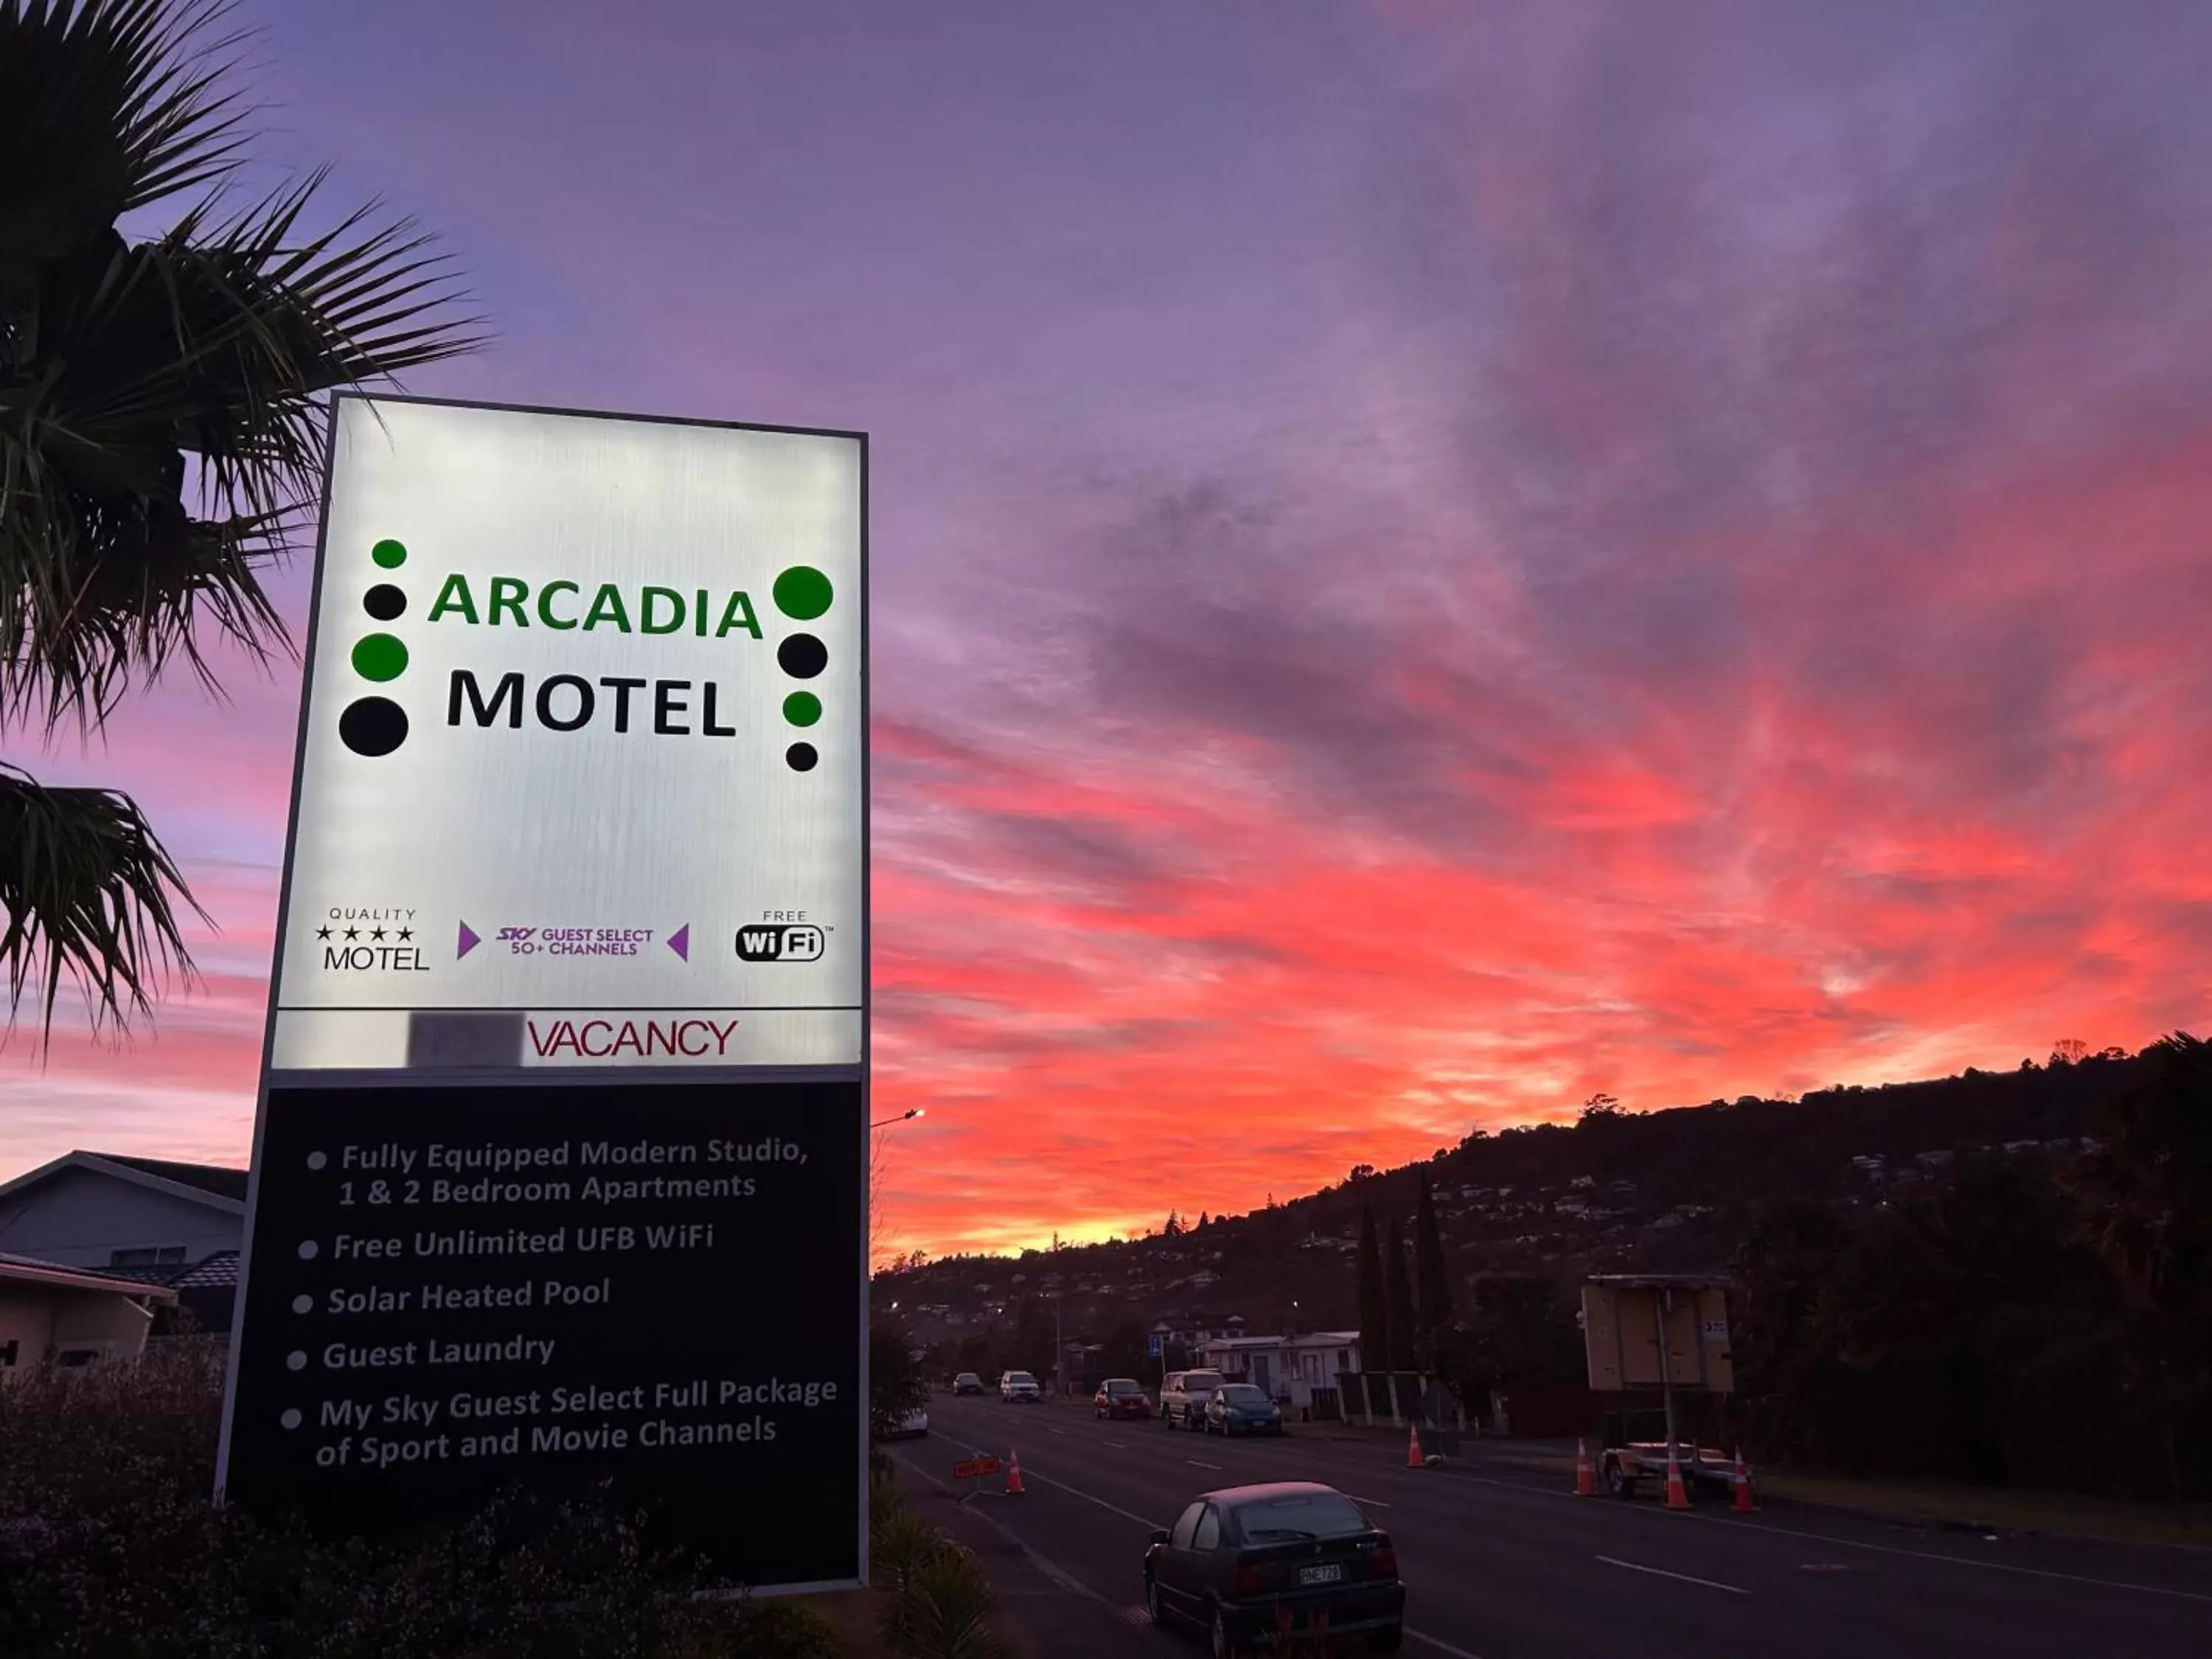 Property logo or sign in Arcadia Motel